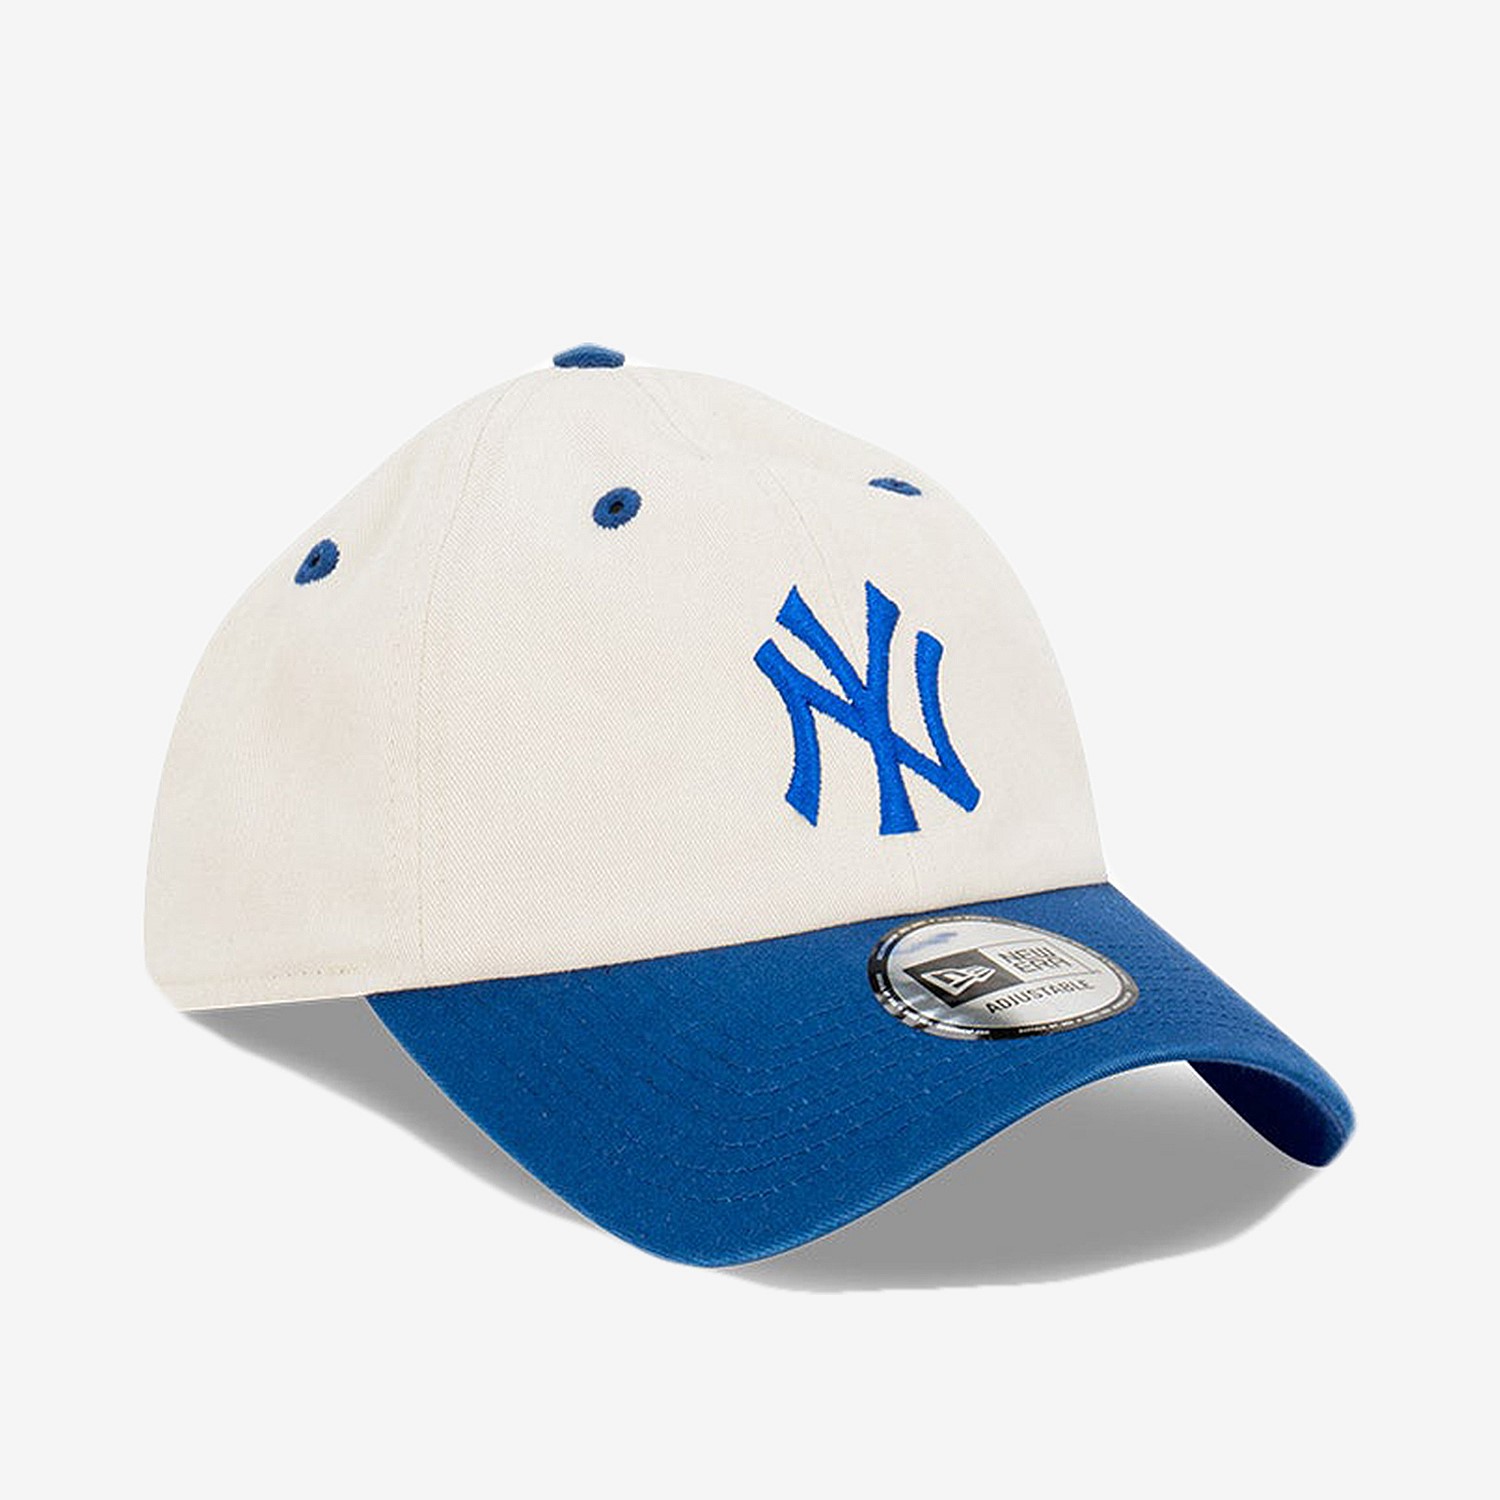 New Era Casual Classic New York Yankees Cap | Caps & Hats | Stirling Sports